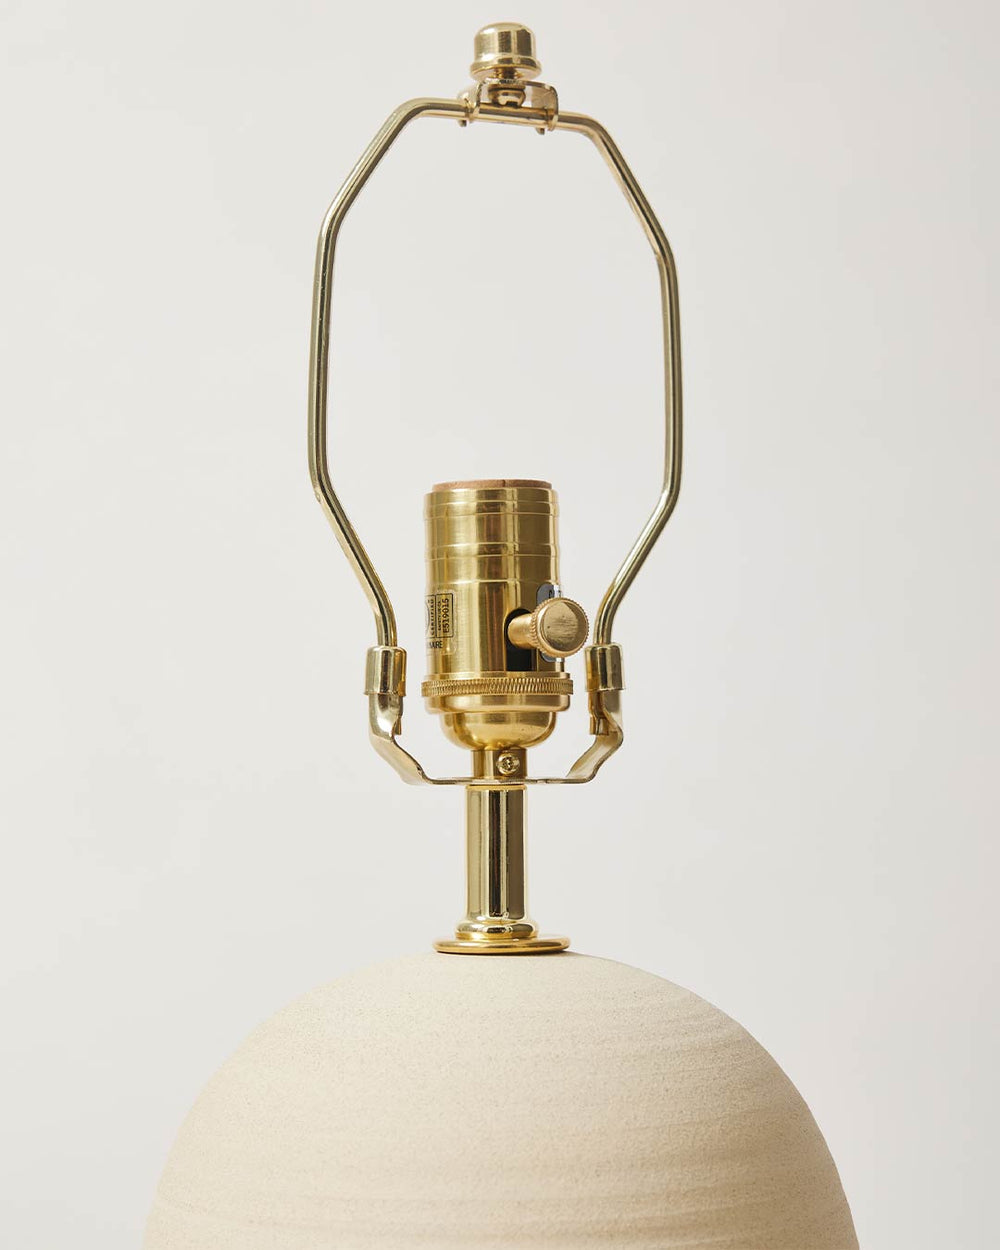 Ball Lamp - Small